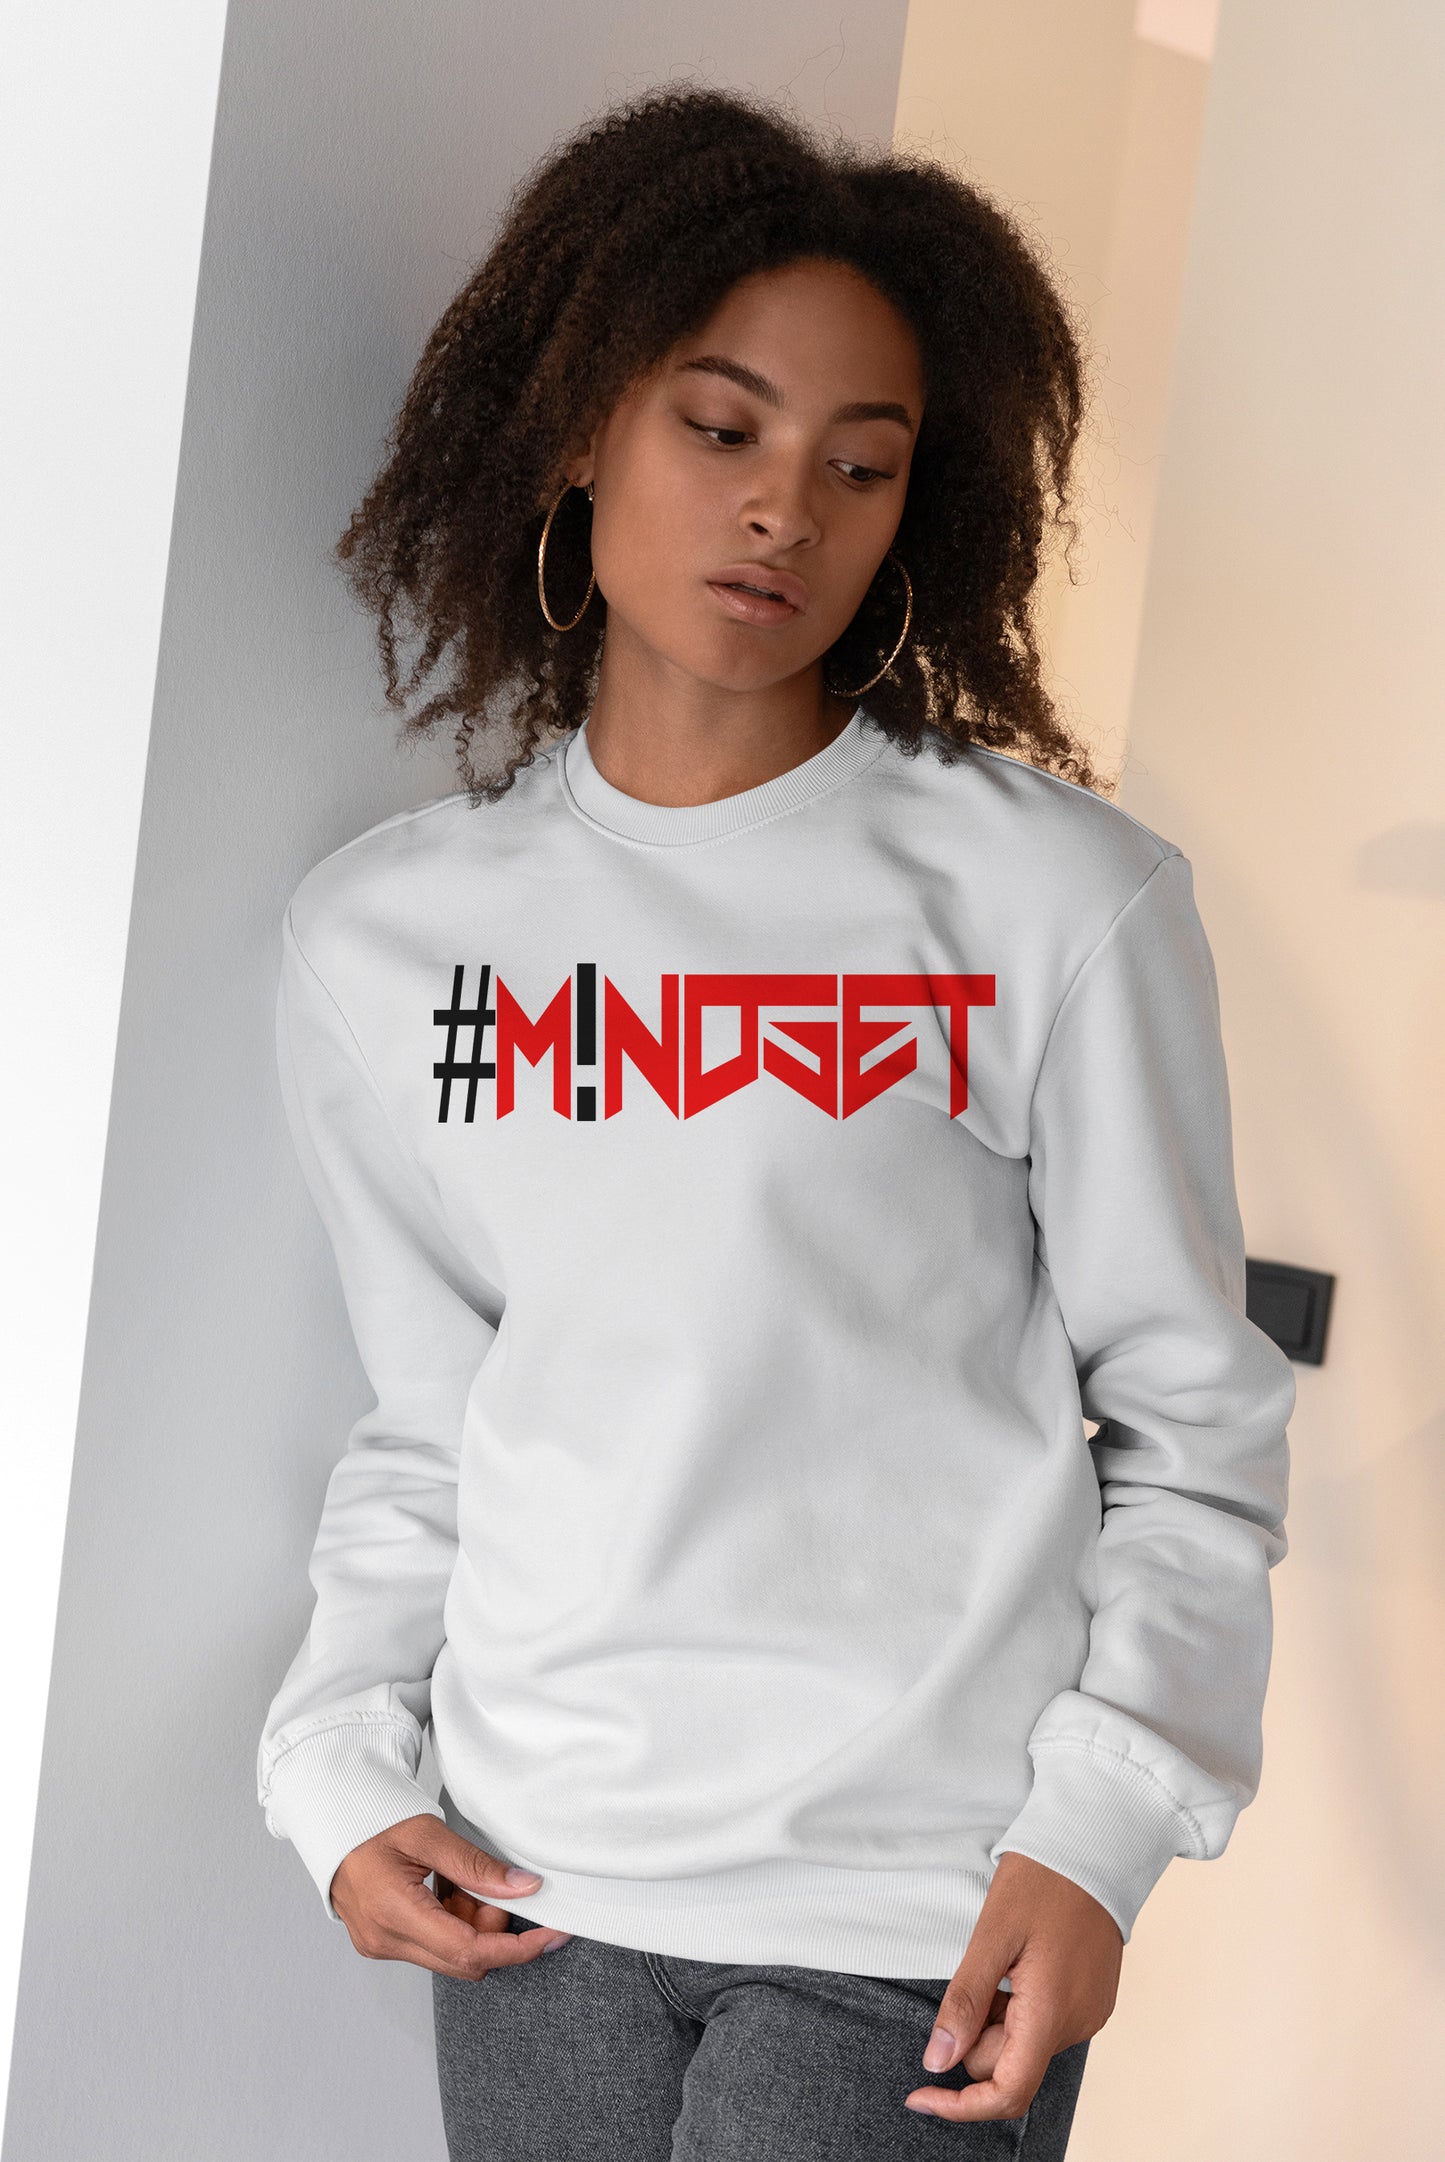 Mindset-2 Sweatshirt